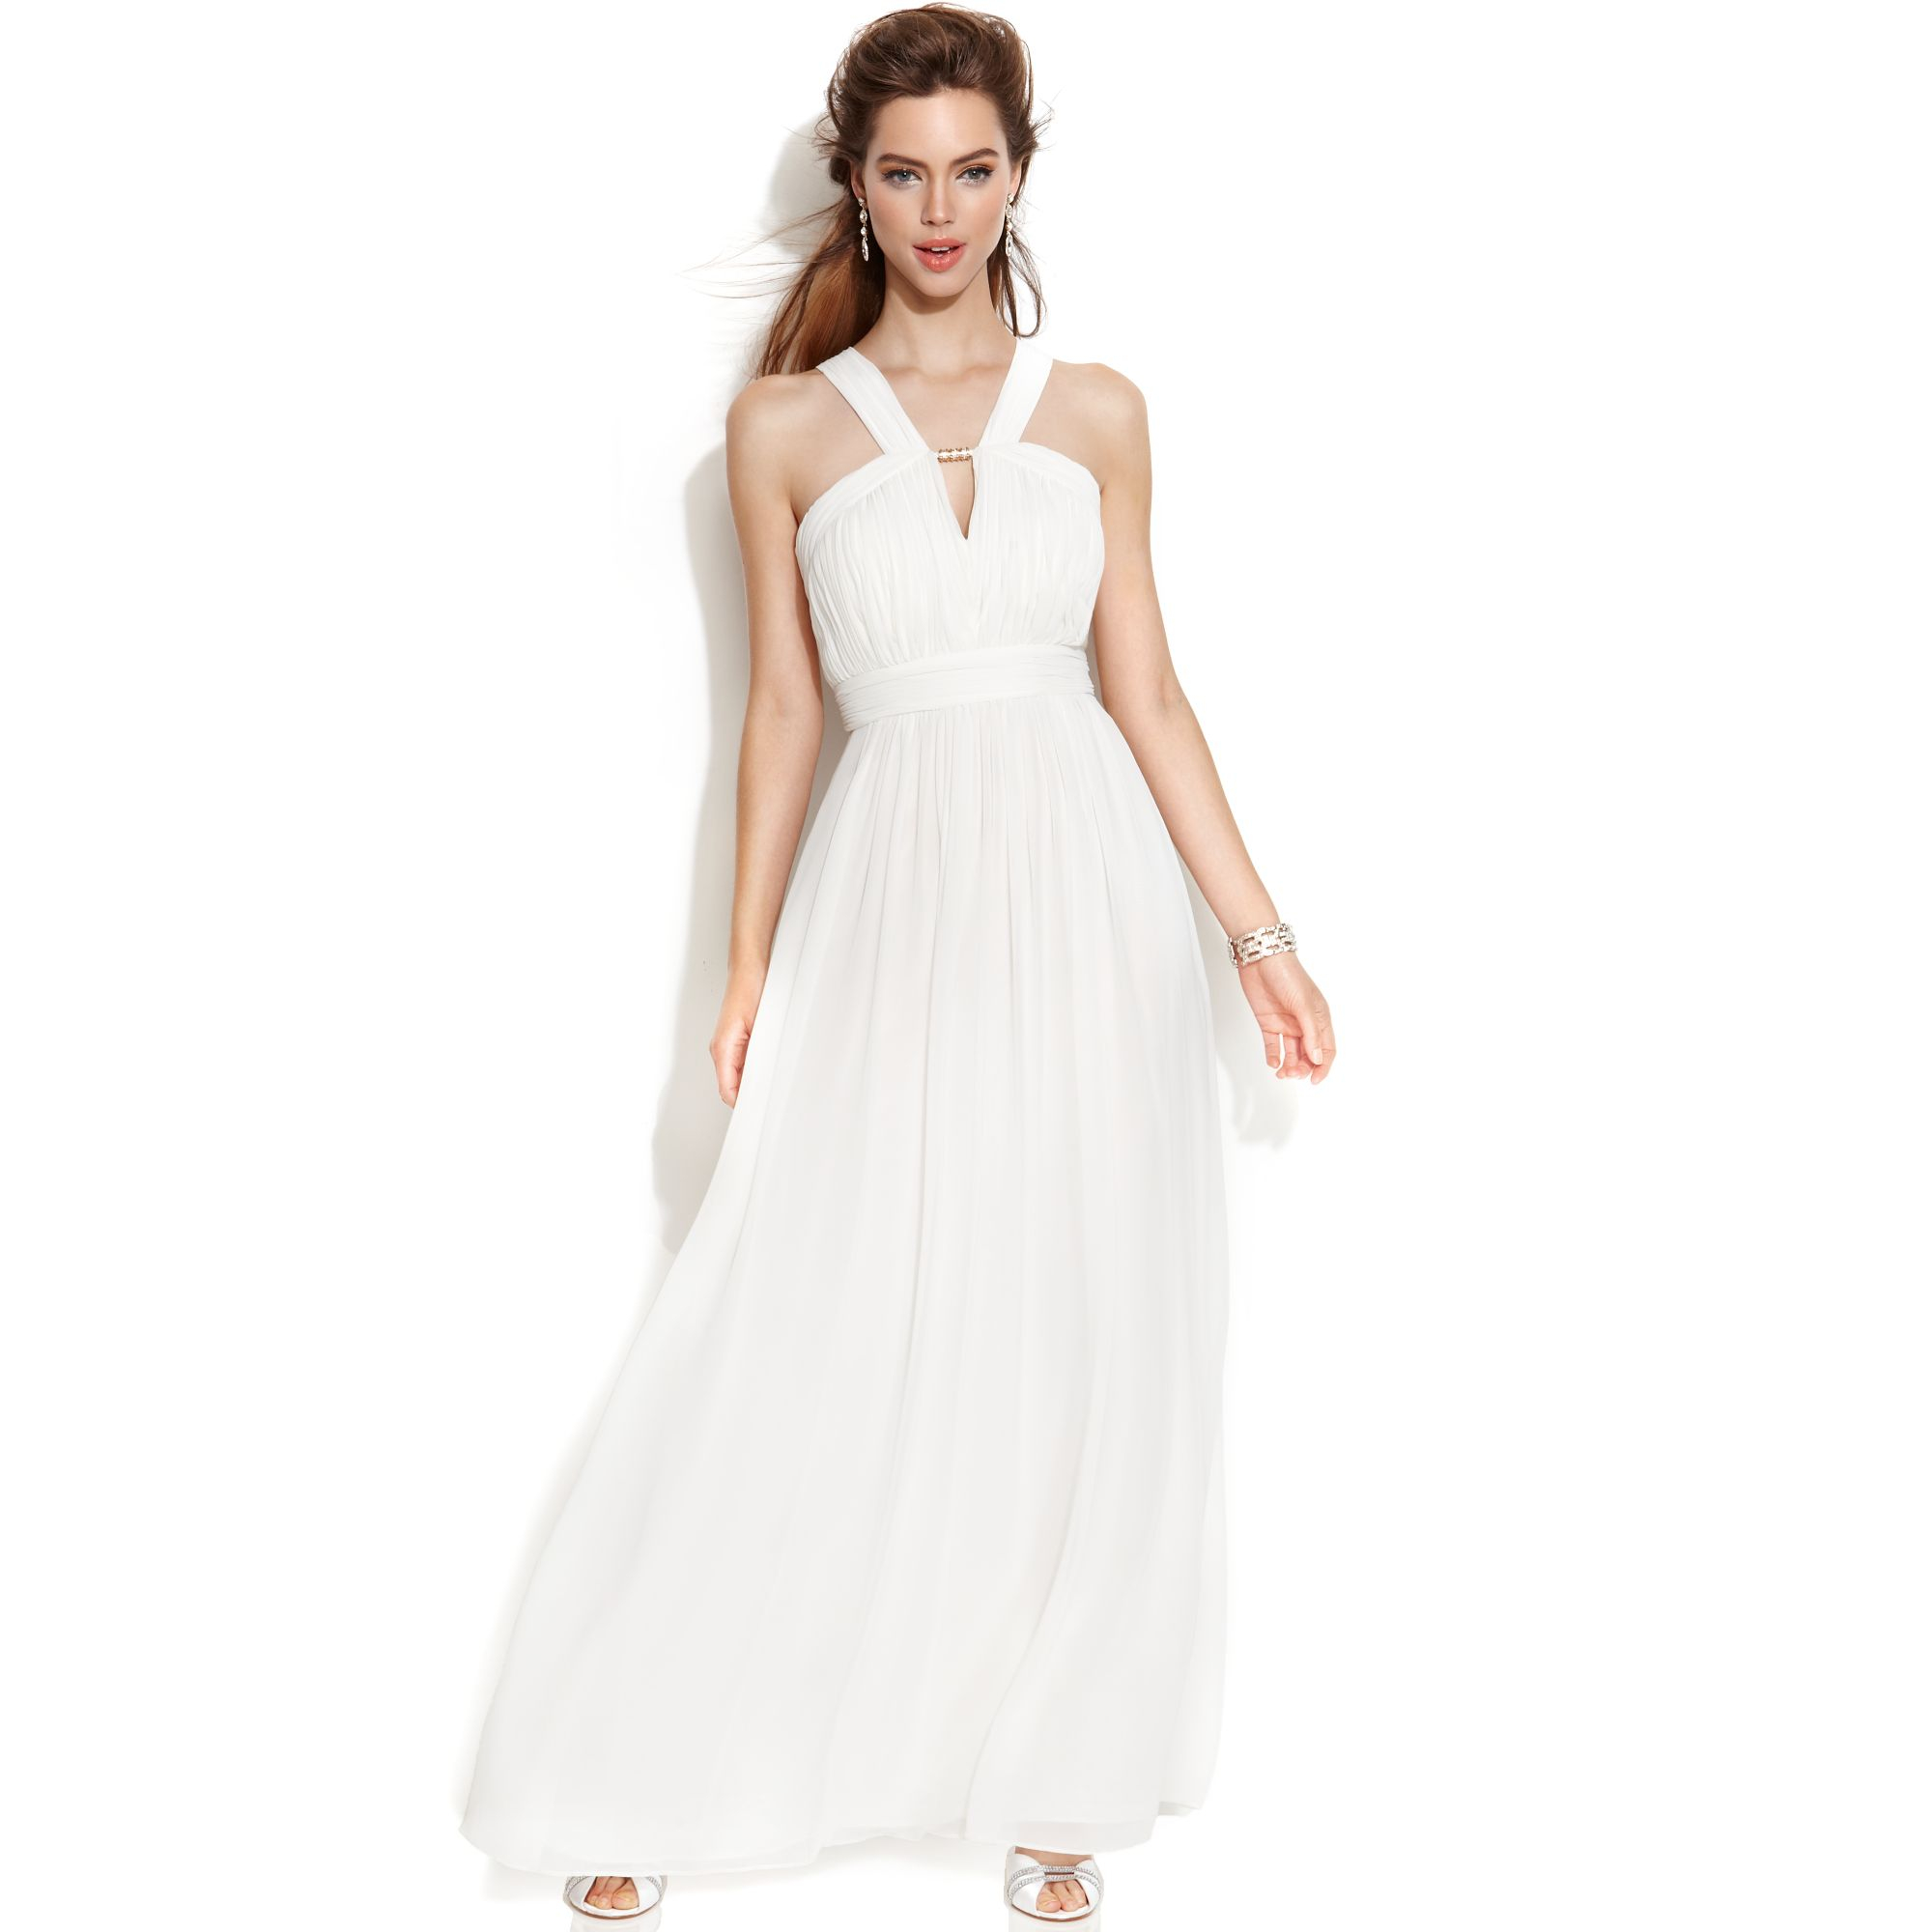 Lyst - Ivanka trump Sleeveless Keyhole Halter Gown in White